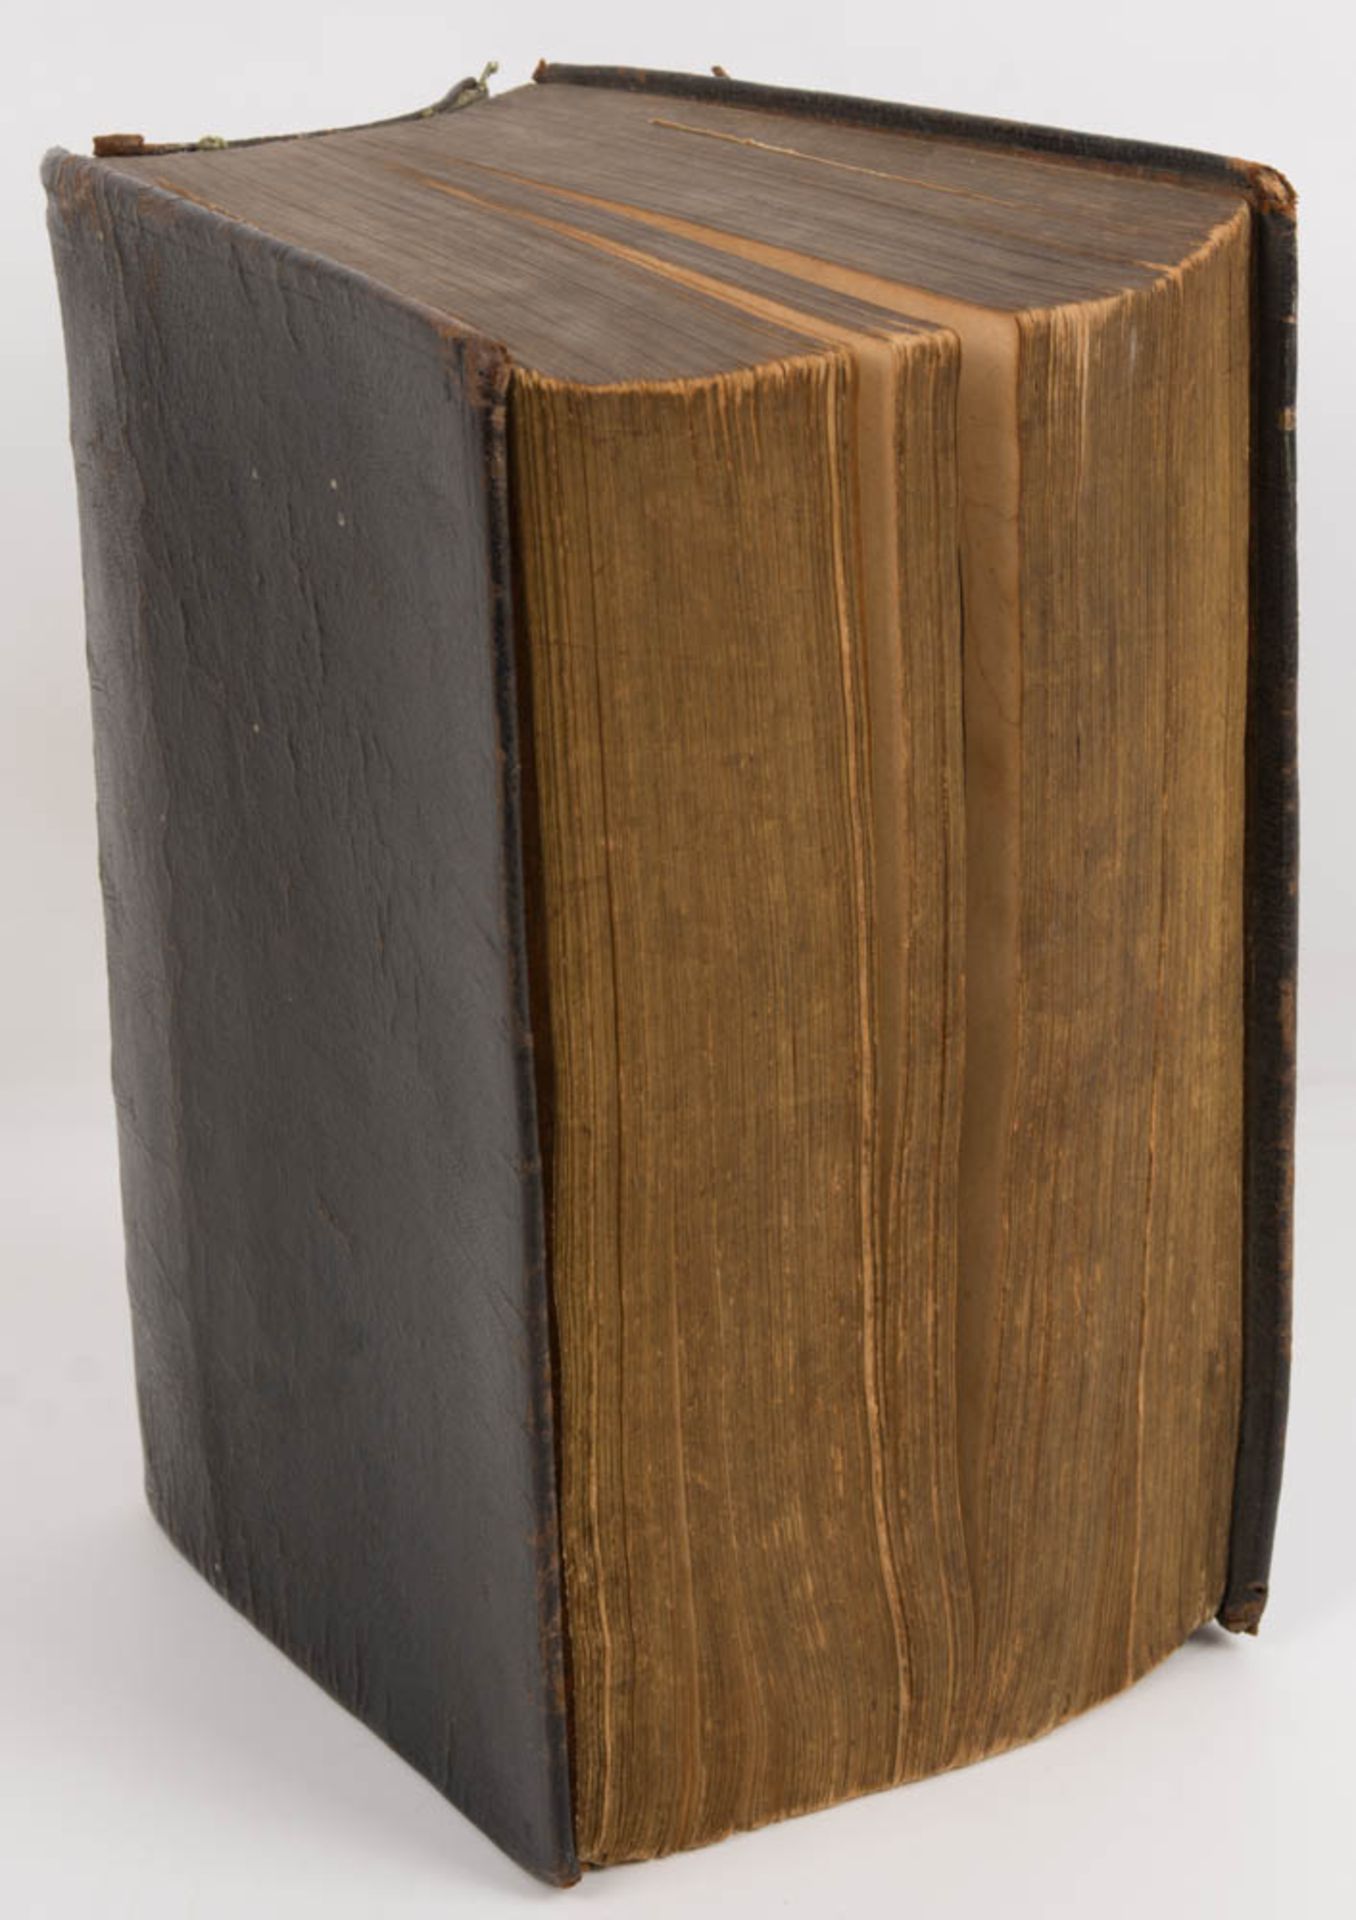 Biblia Germanica, Verlag Weidmann, Leipzig 1720.